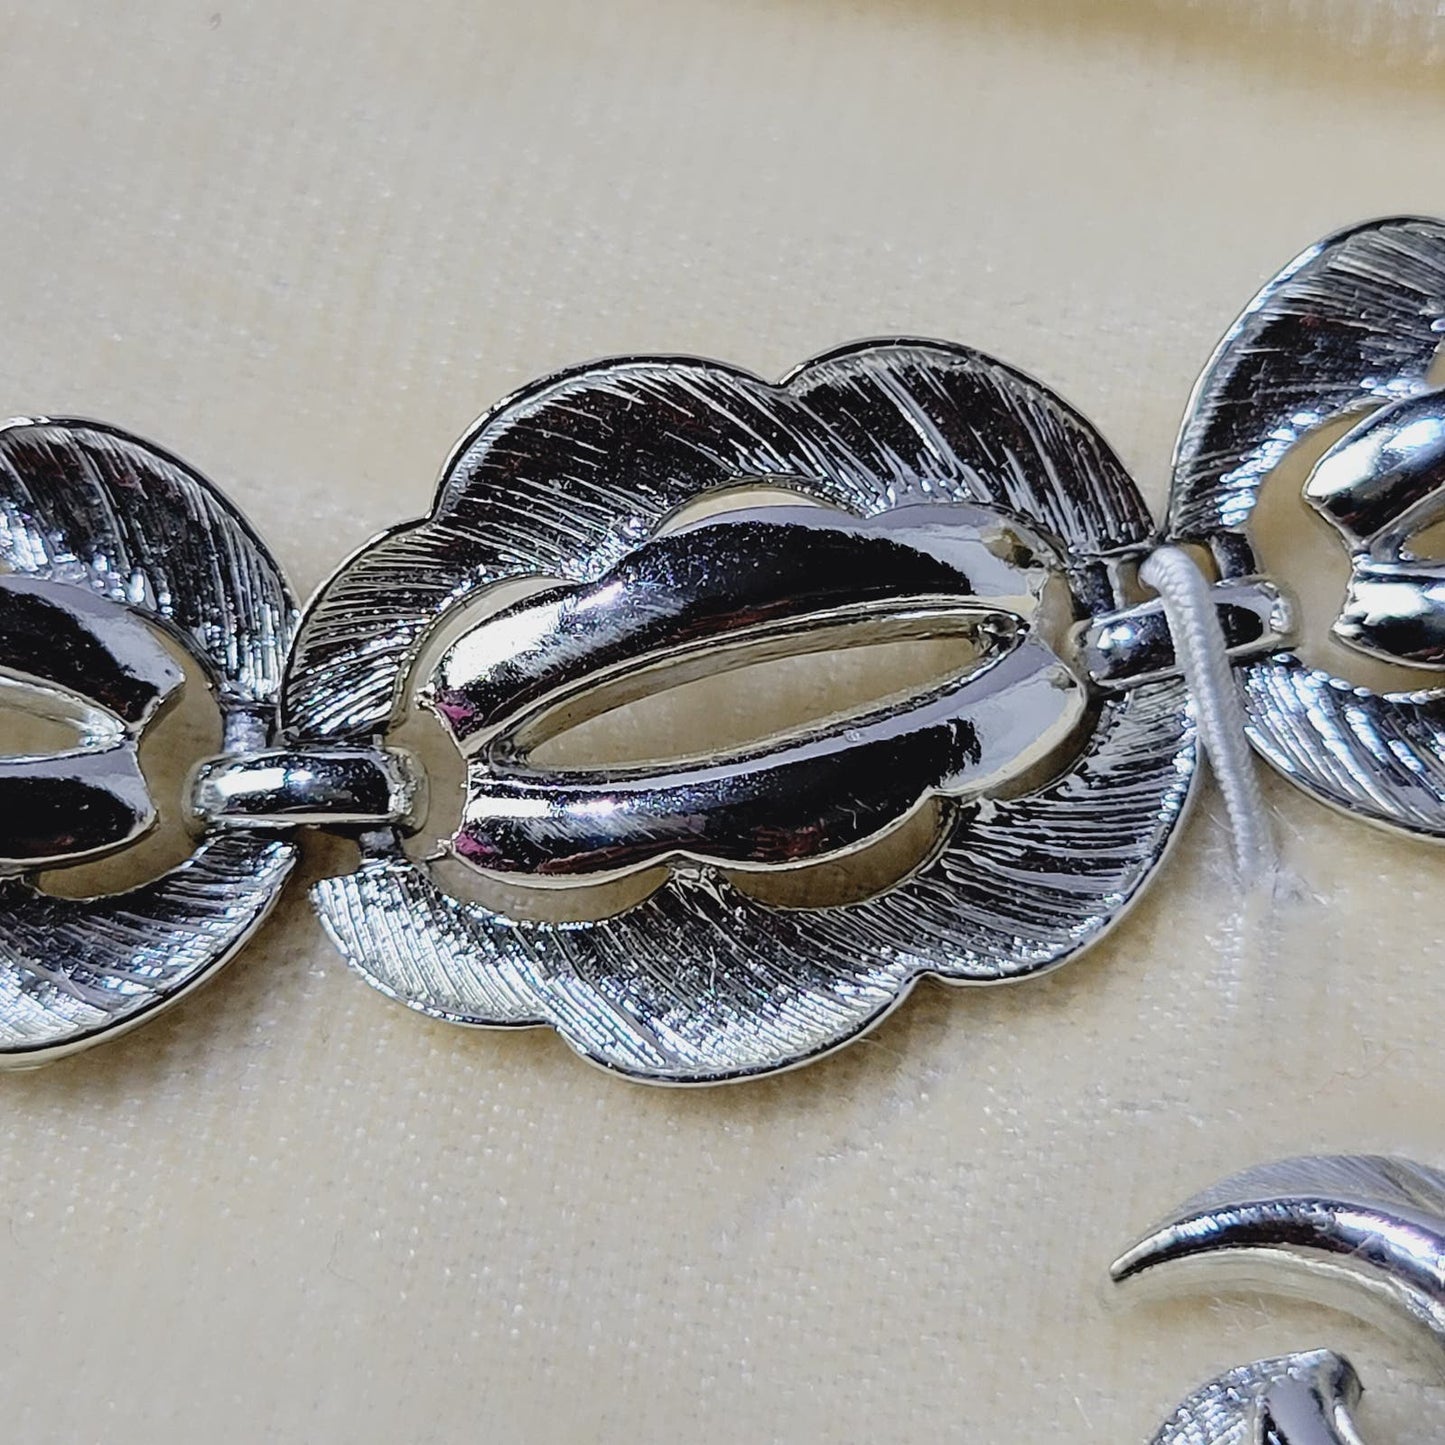 Vintage Coro bracelet and earrings set in original box silver-tone 1960s